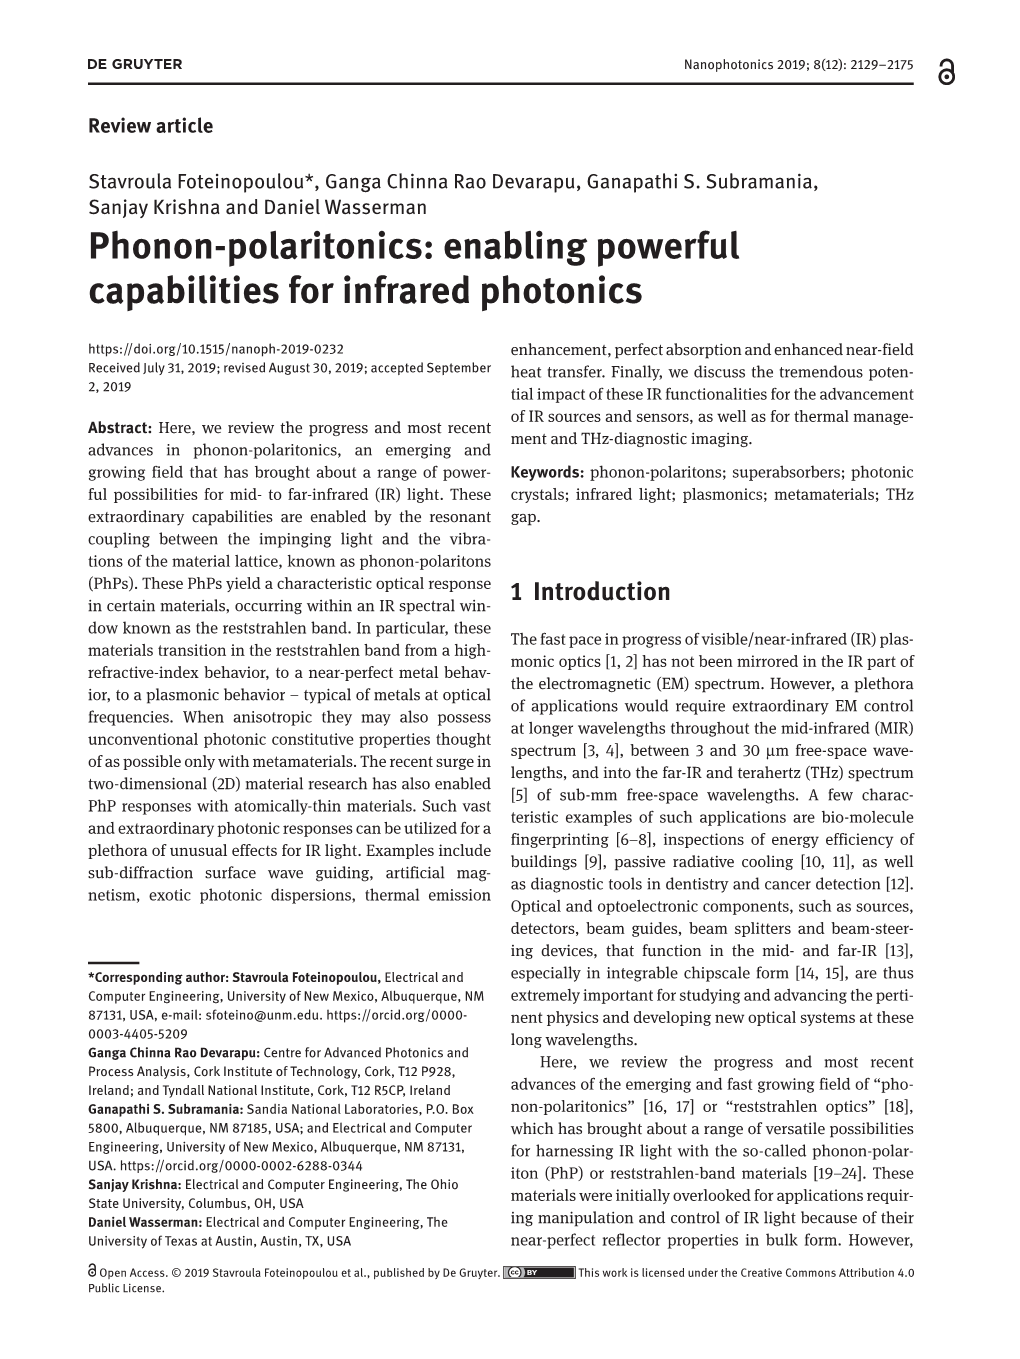 Phonon-Polaritonics: Enabling Powerful Capabilities for Infrared Photonics